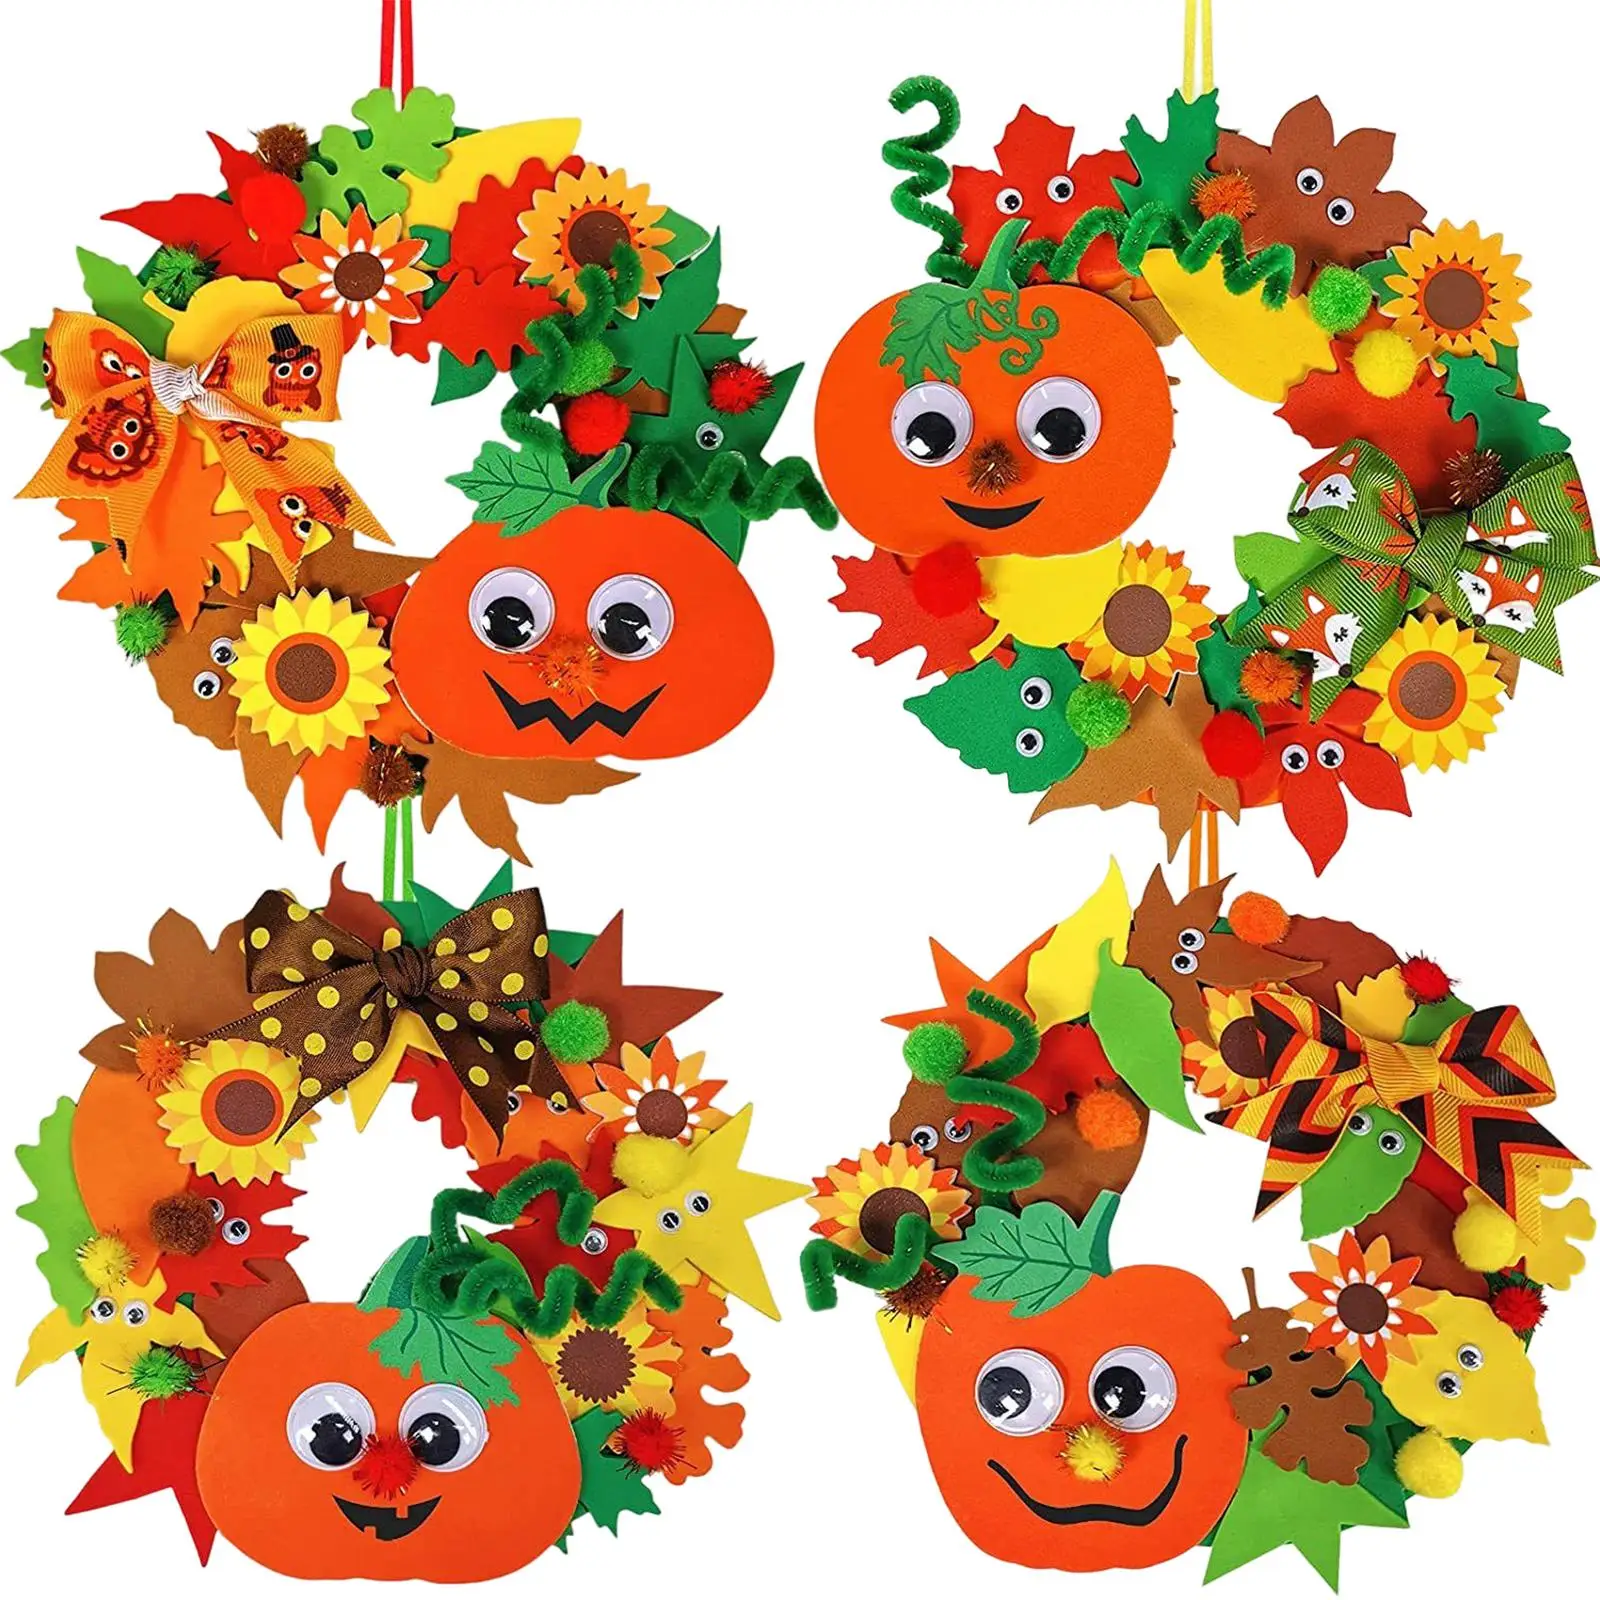 3D Pumpkin Fall Leaf Wreath Craft Kit DIY Thanksgiving Wreath with Maple Leaves